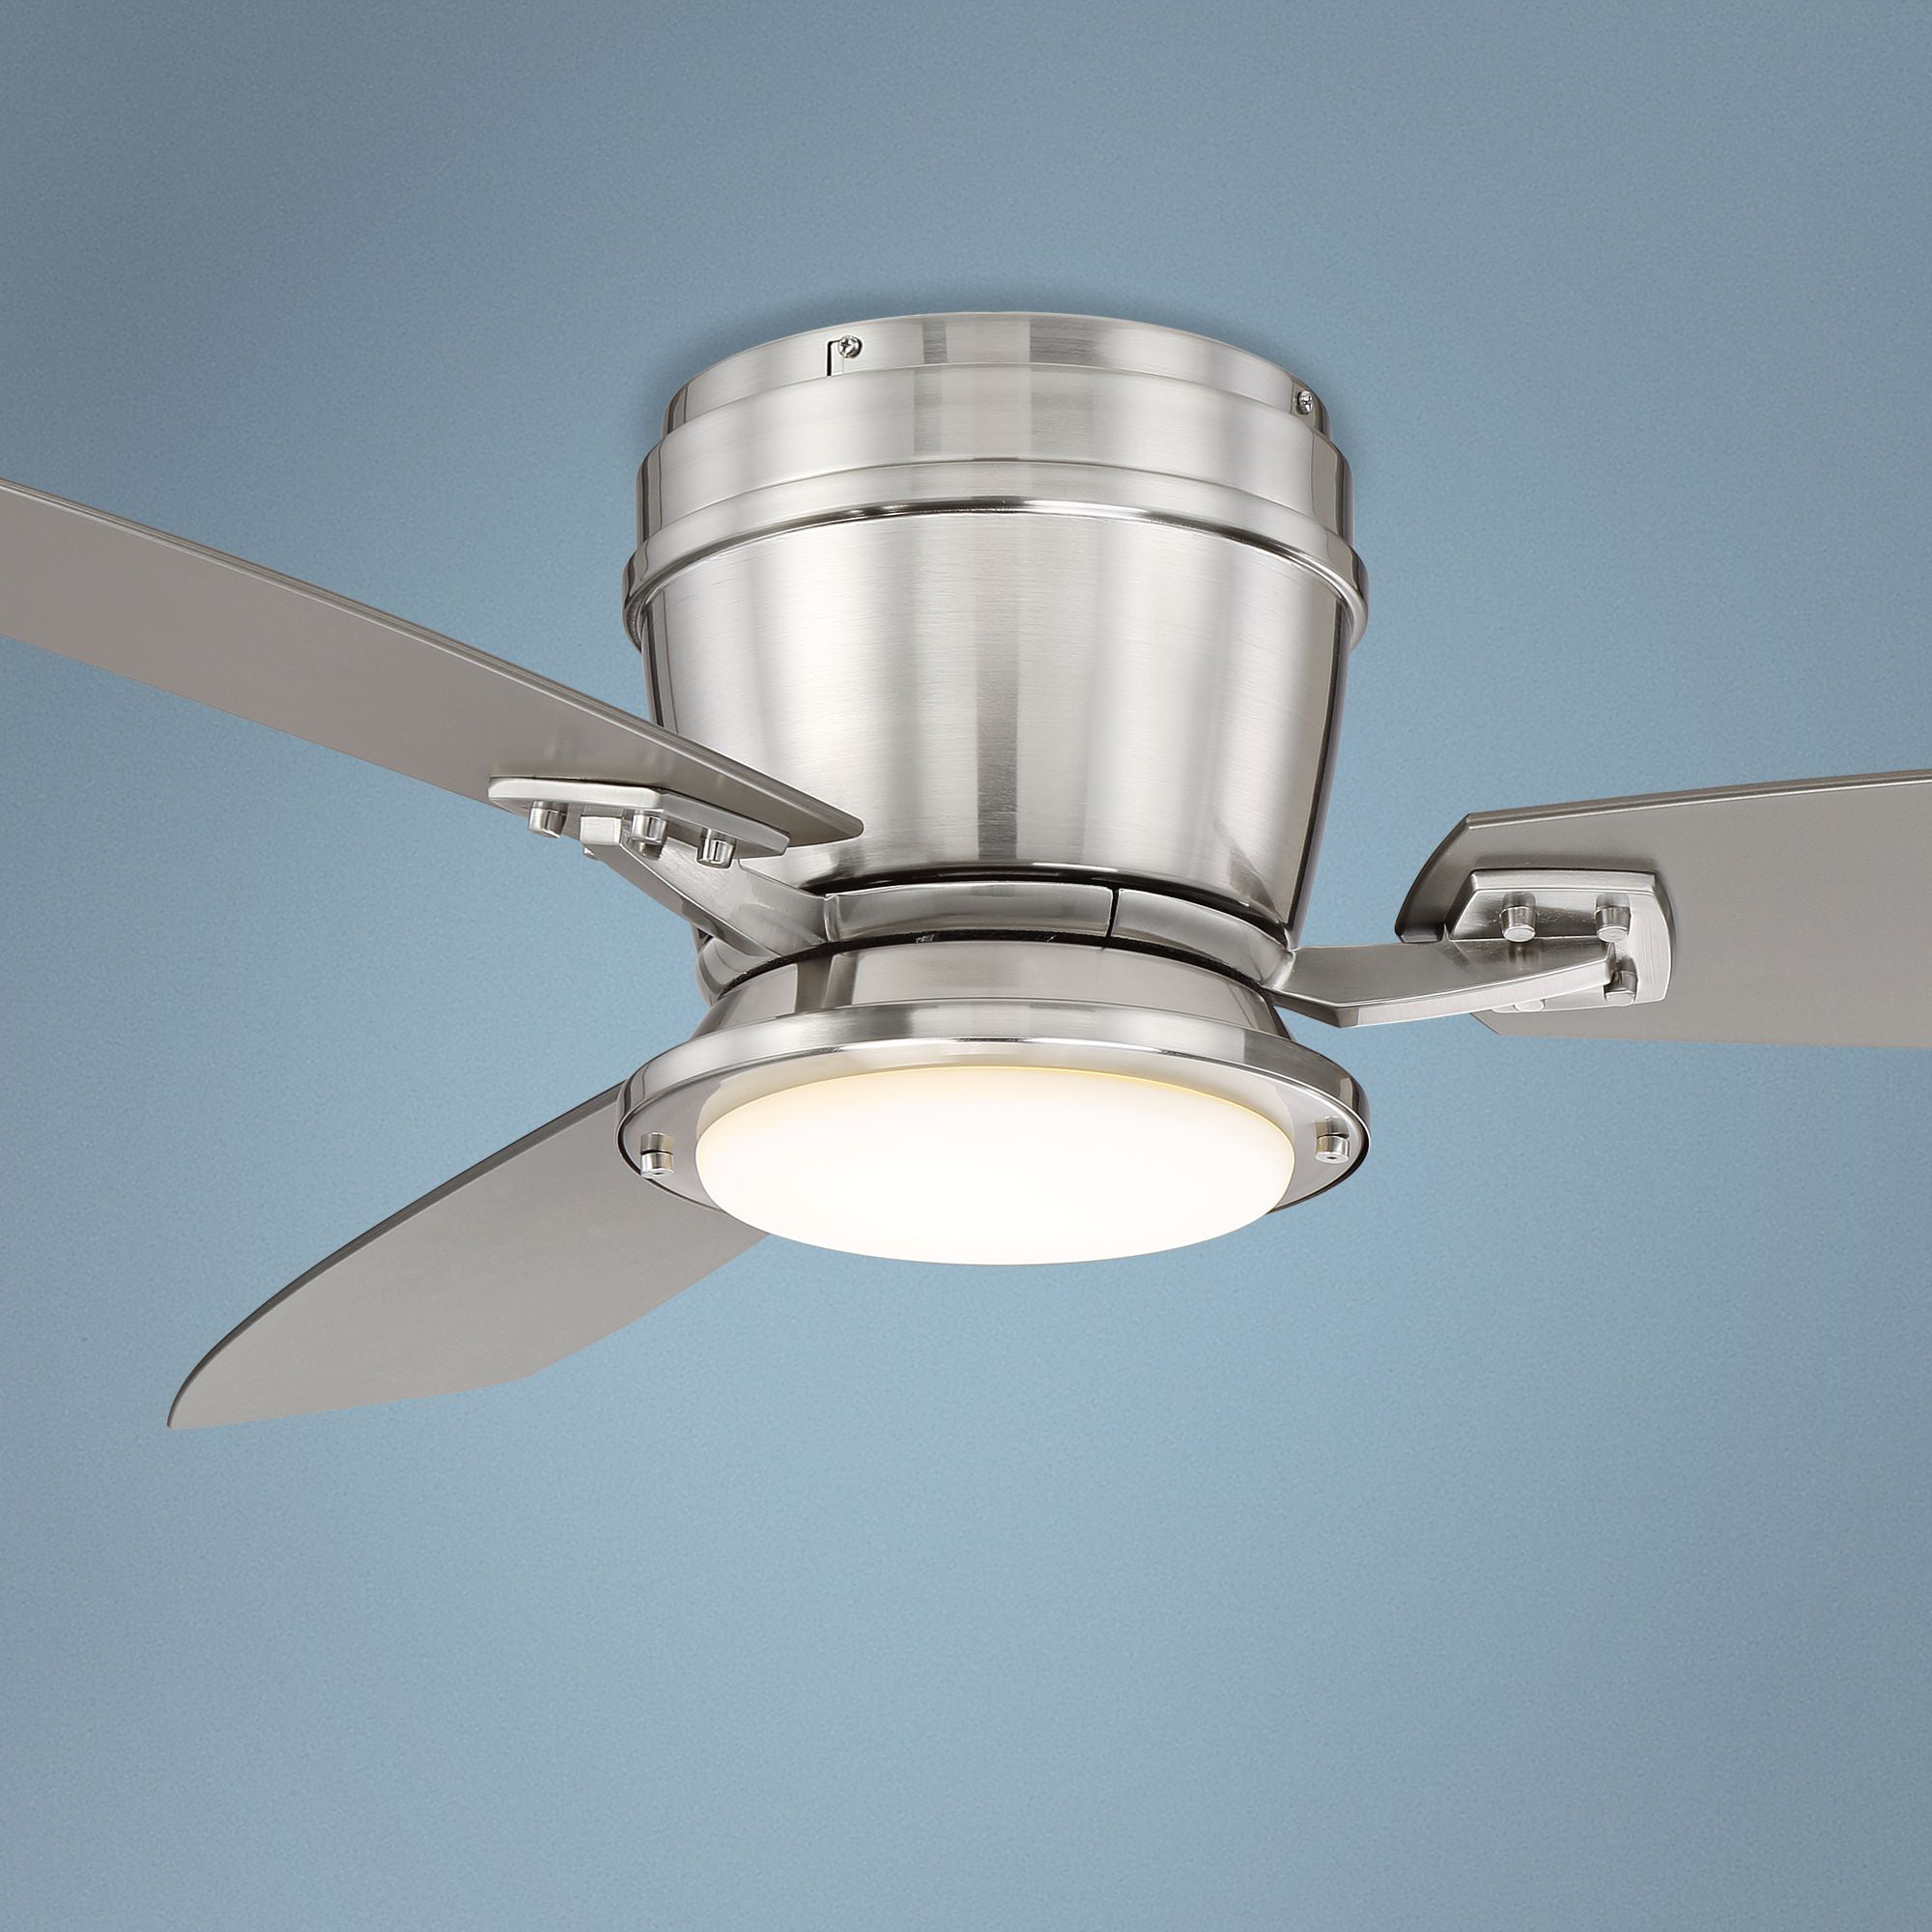 Emerson 52" Curva Sky Brushed Steel Damp LED Outdoor Ceiling Fan CF152LBS 